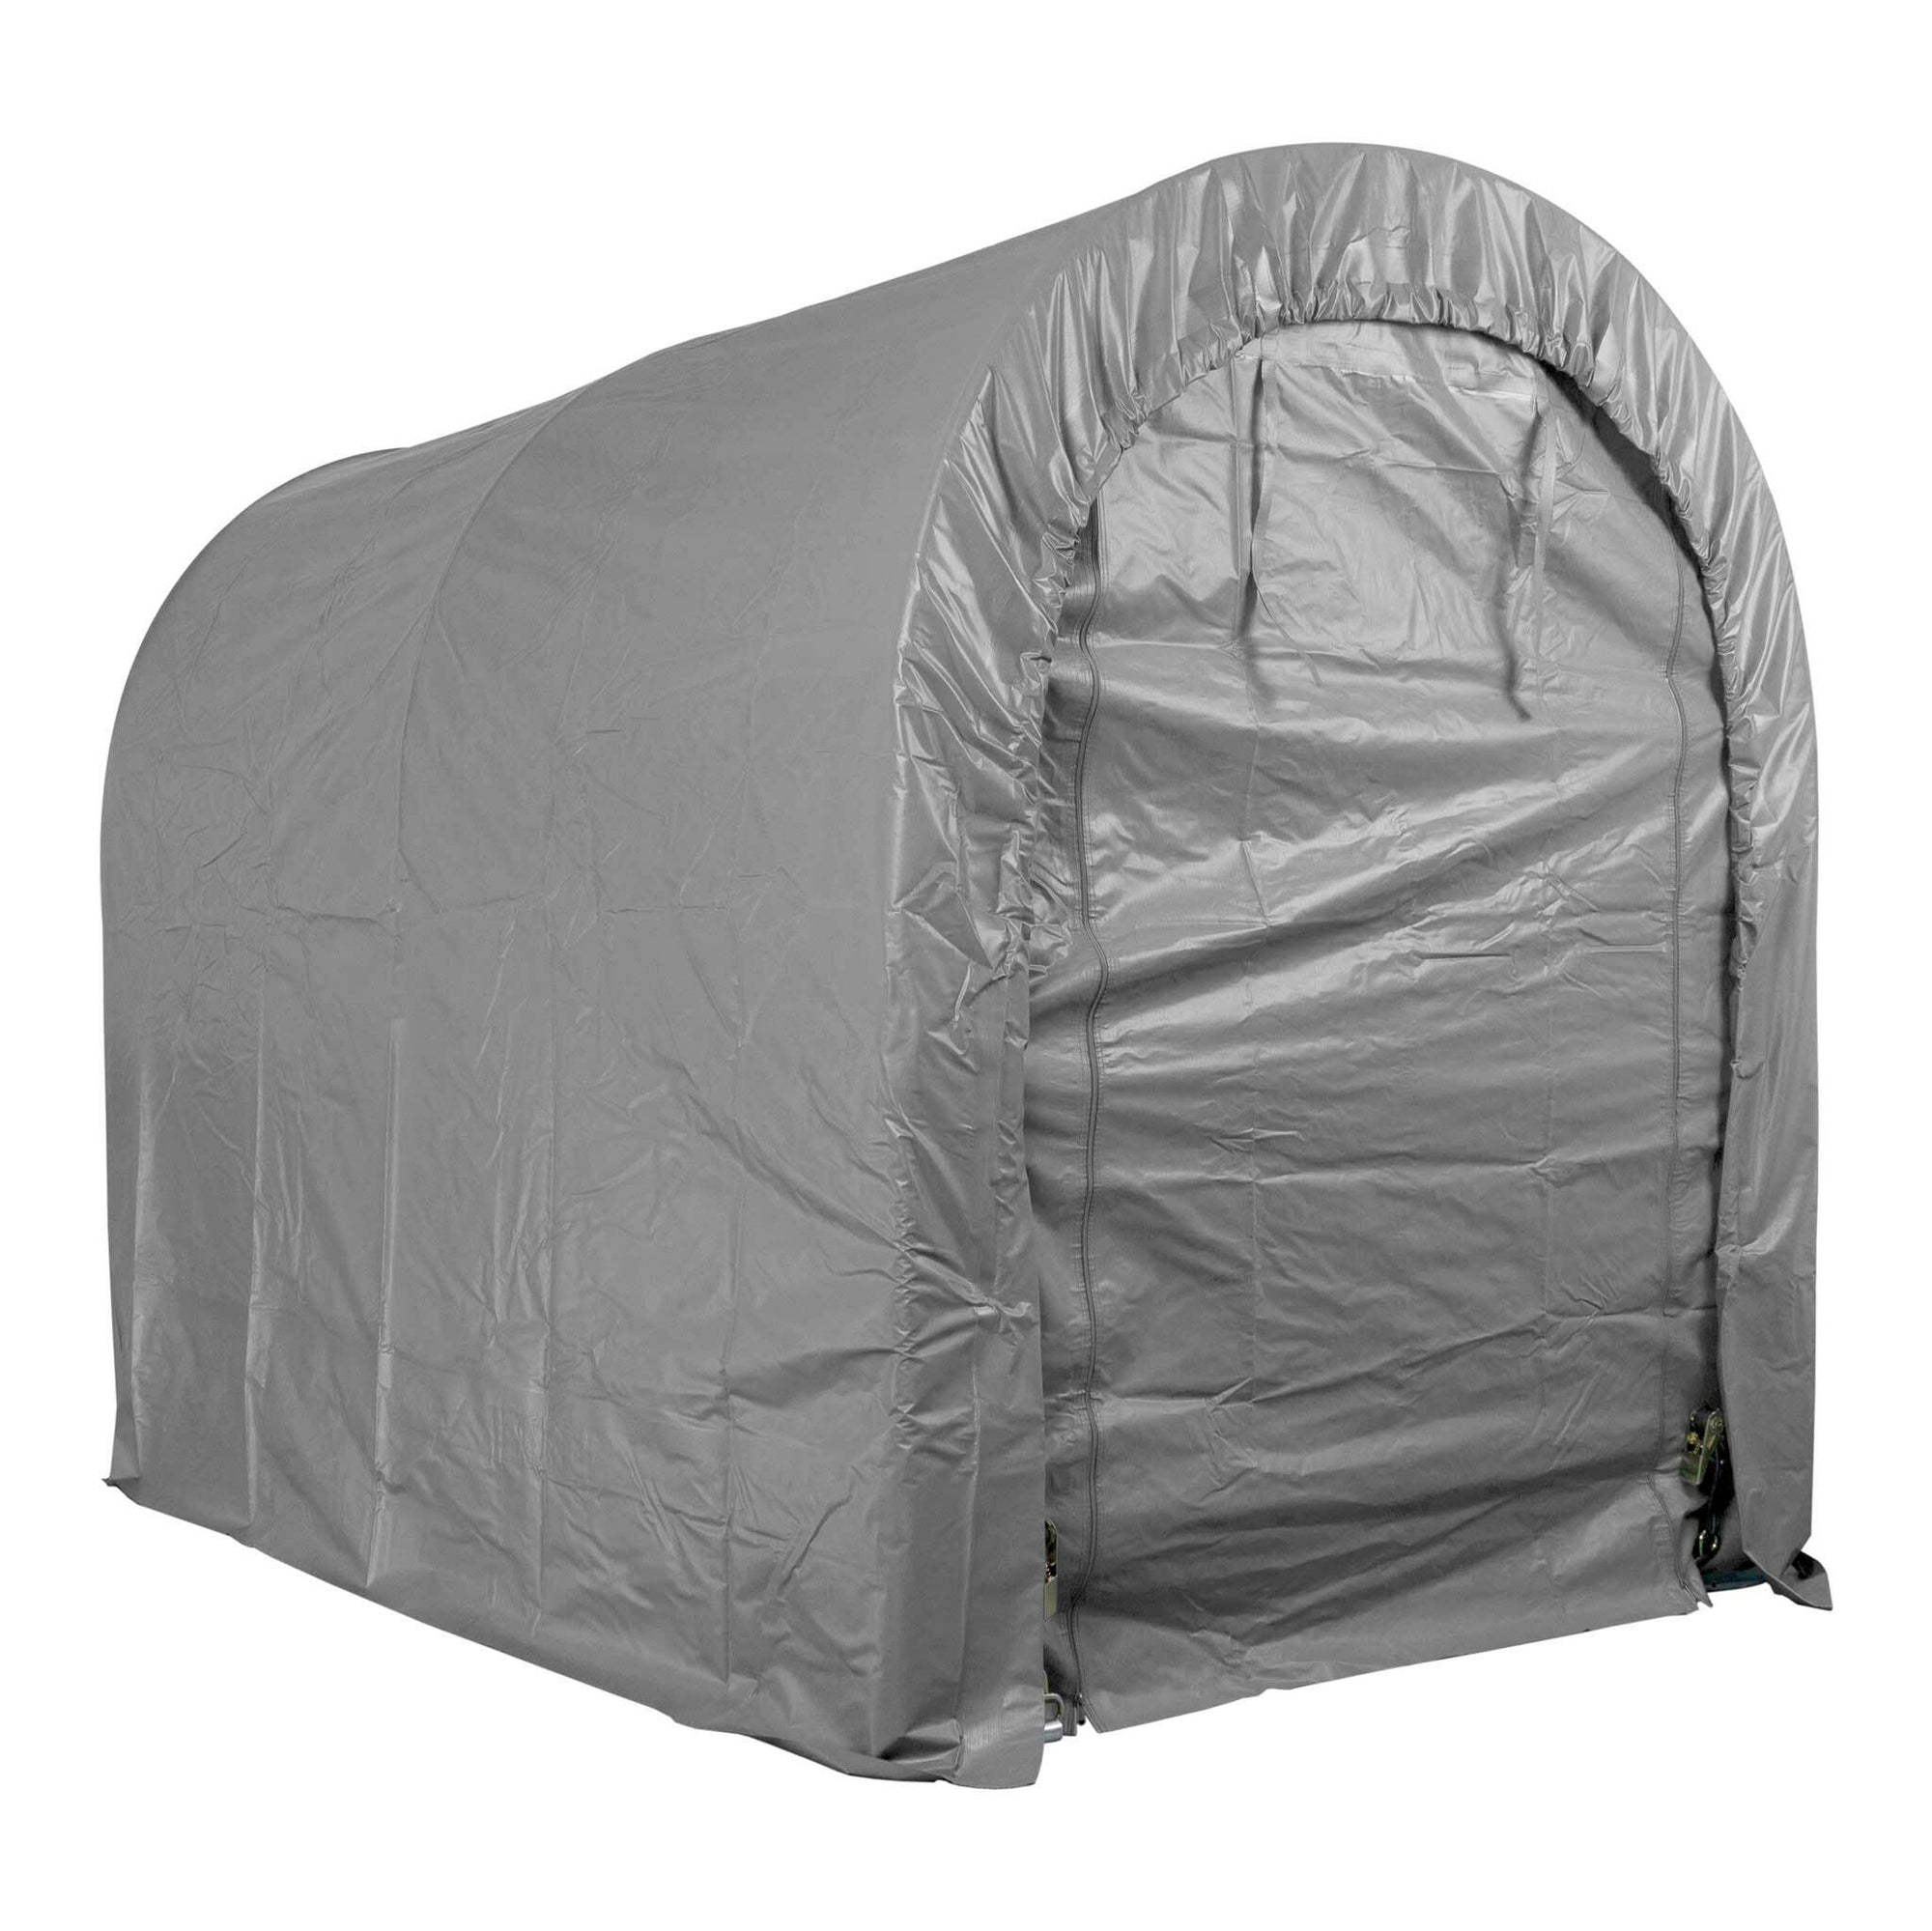 Fornorth Tente garage 1,6x2,4m, gris clair